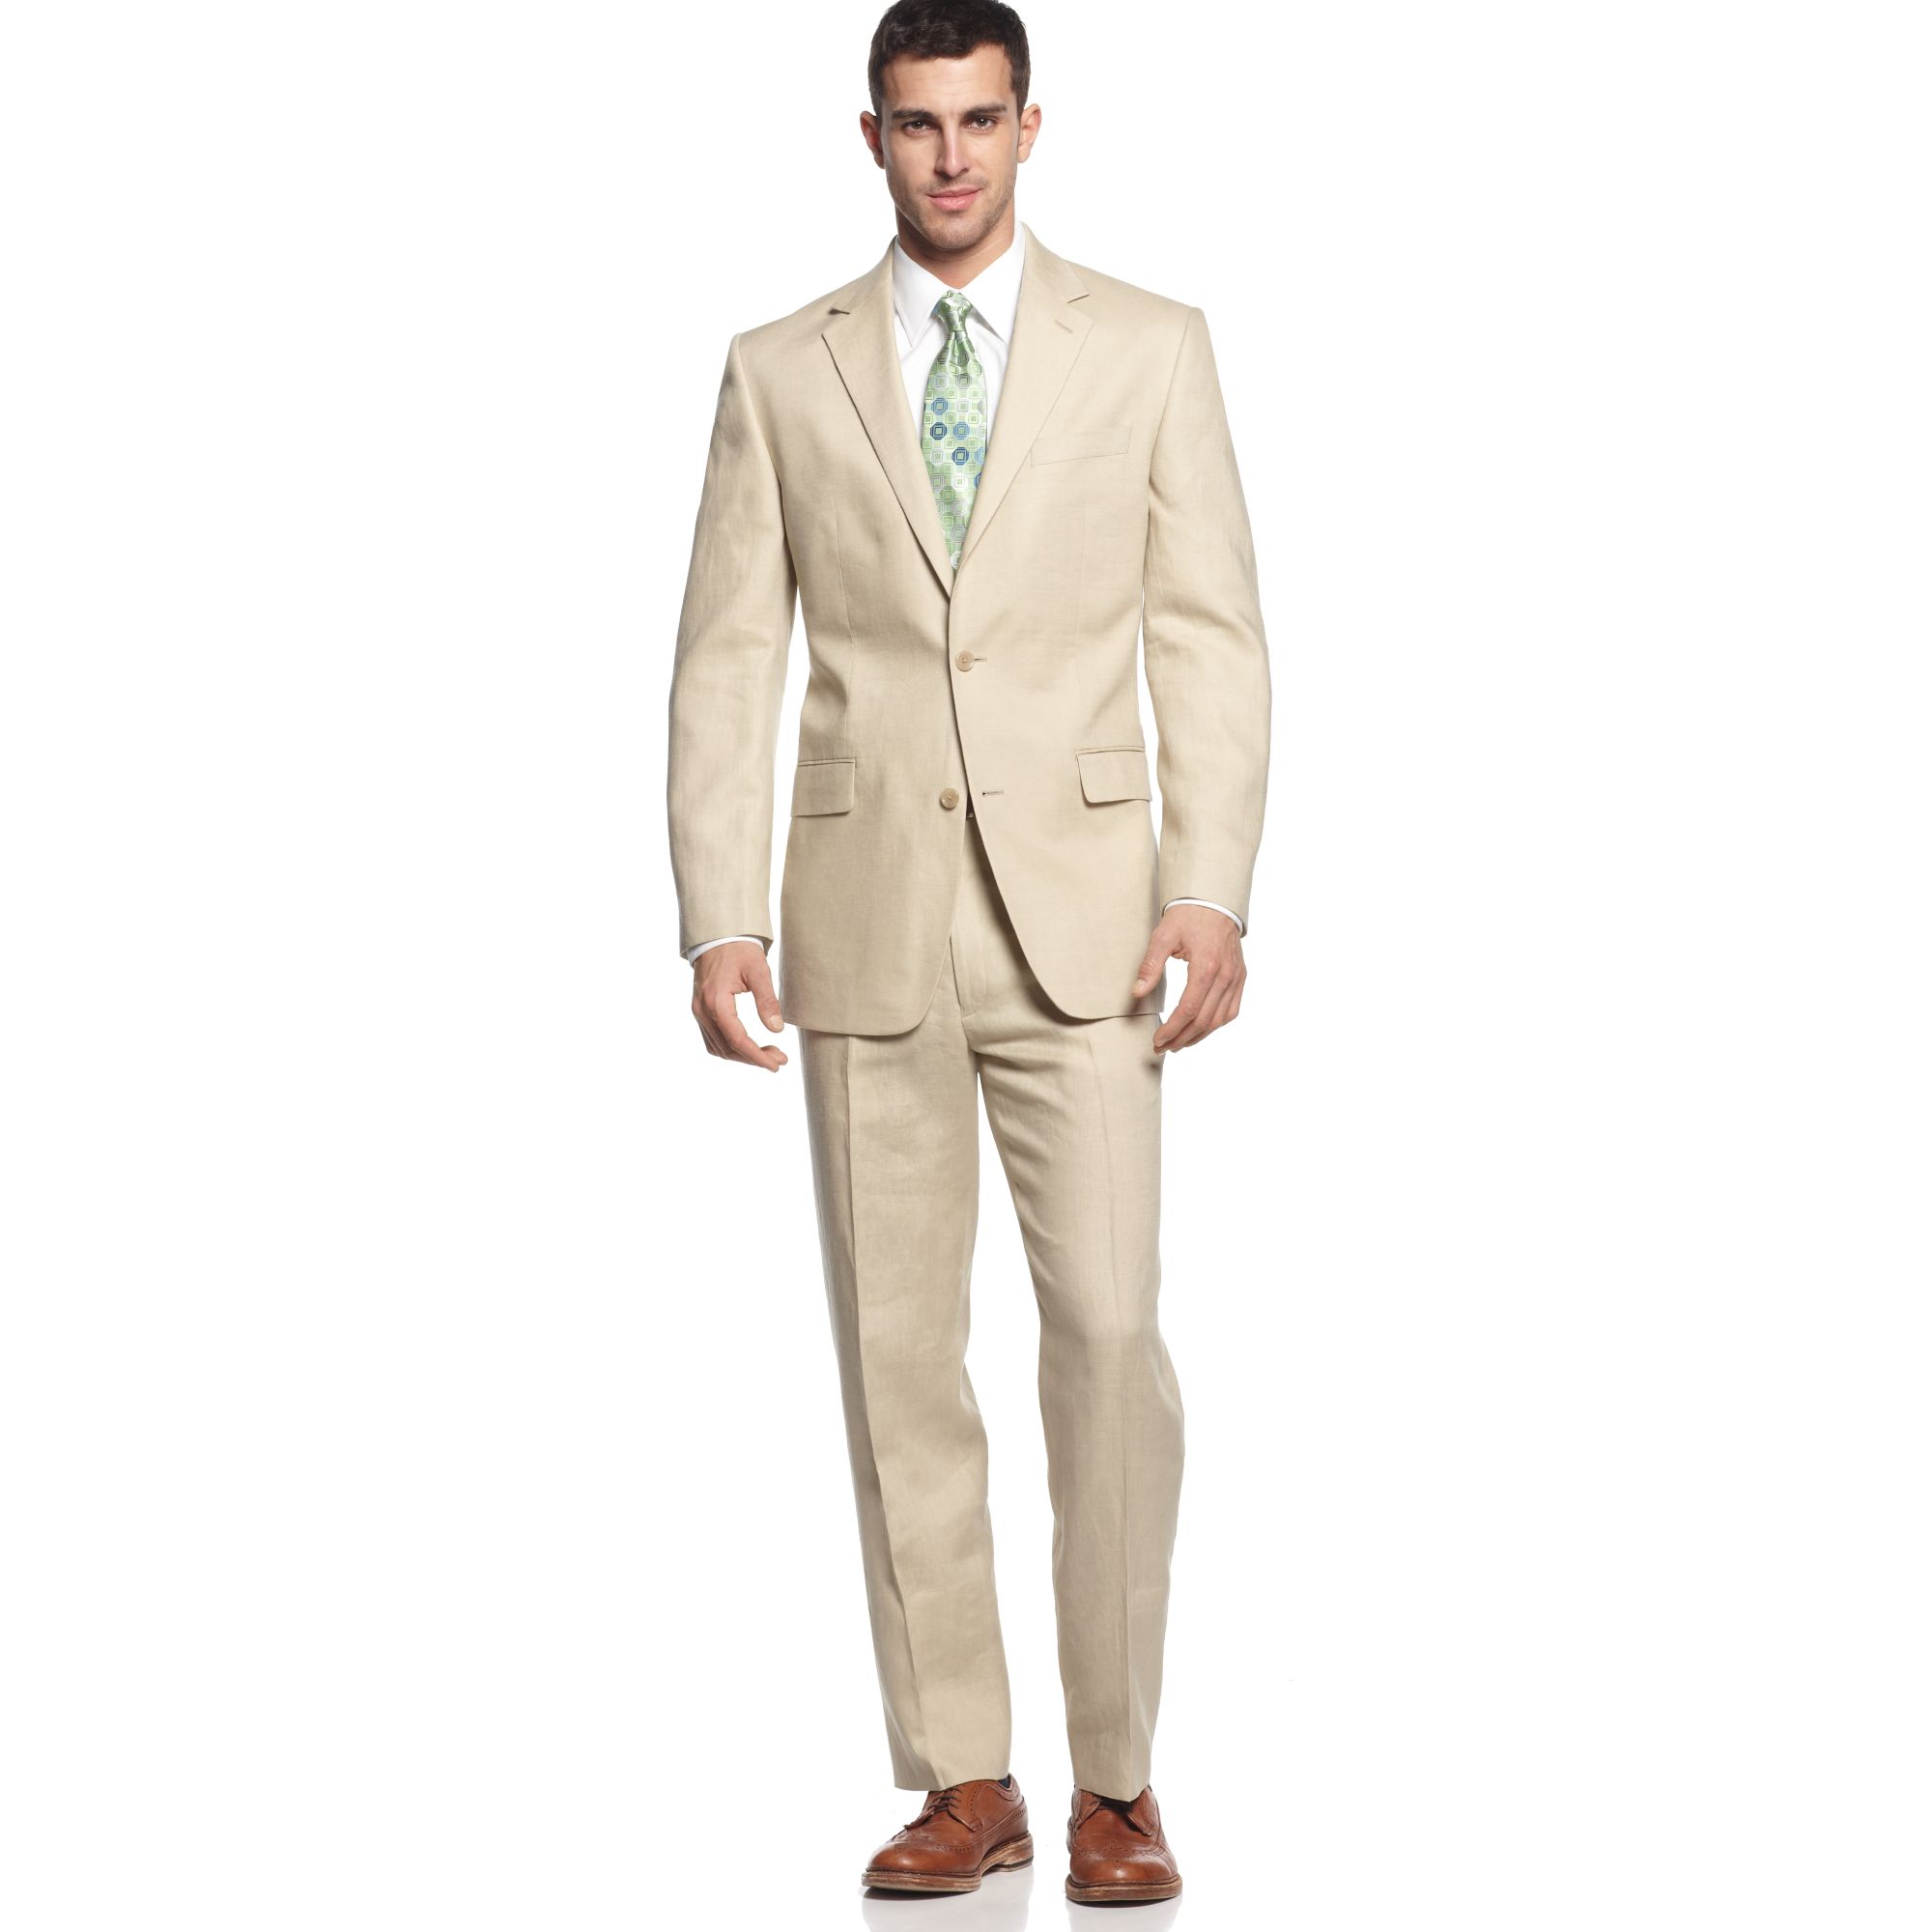 Lyst - Michael Kors Natural Linen Suit in Natural for Men